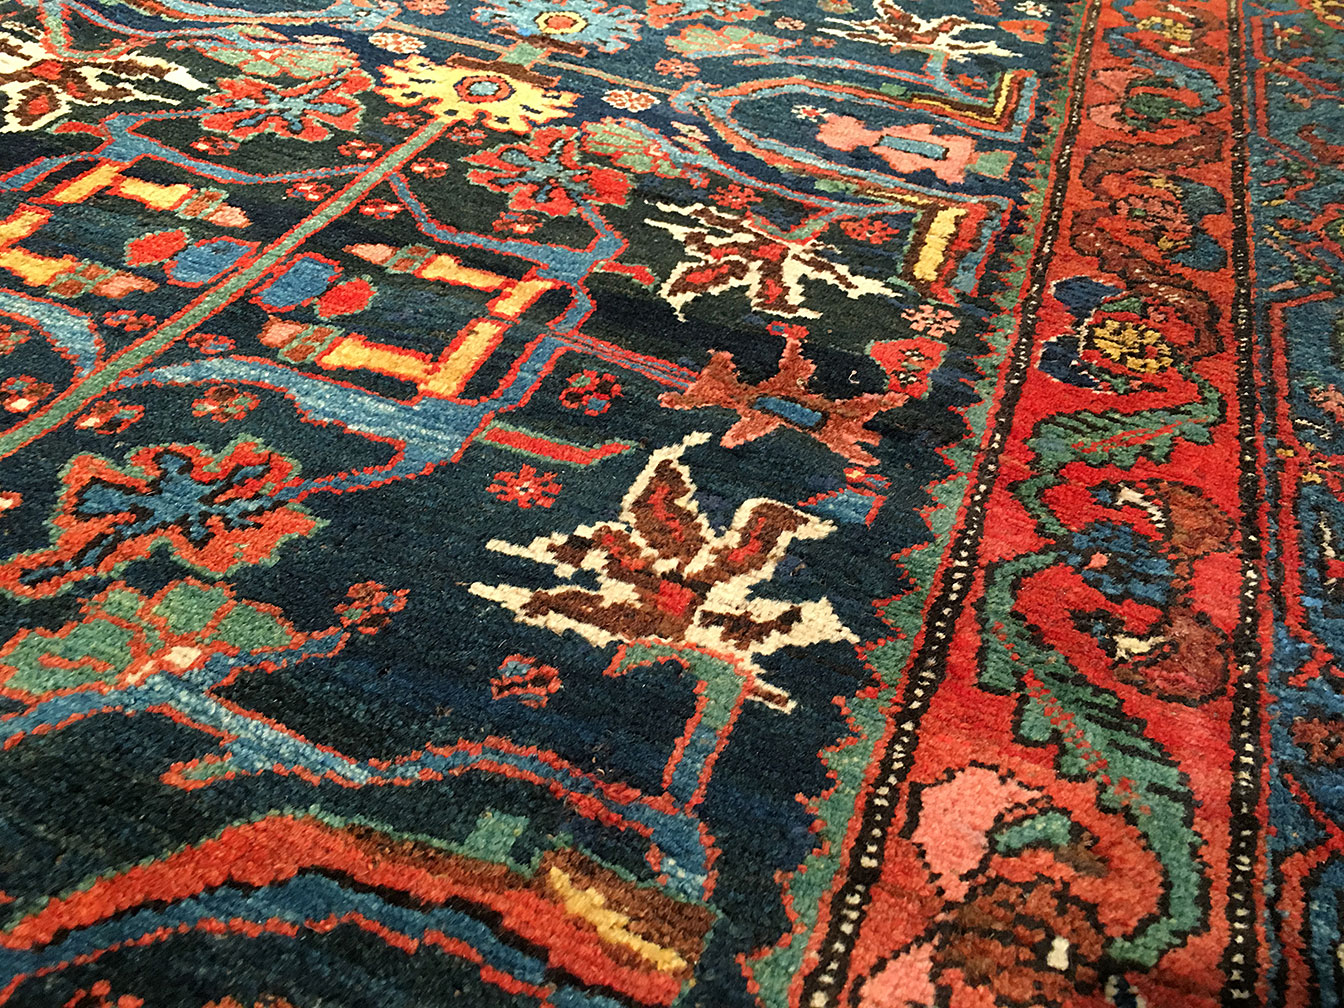 Antique bidjar Carpet - # 52563